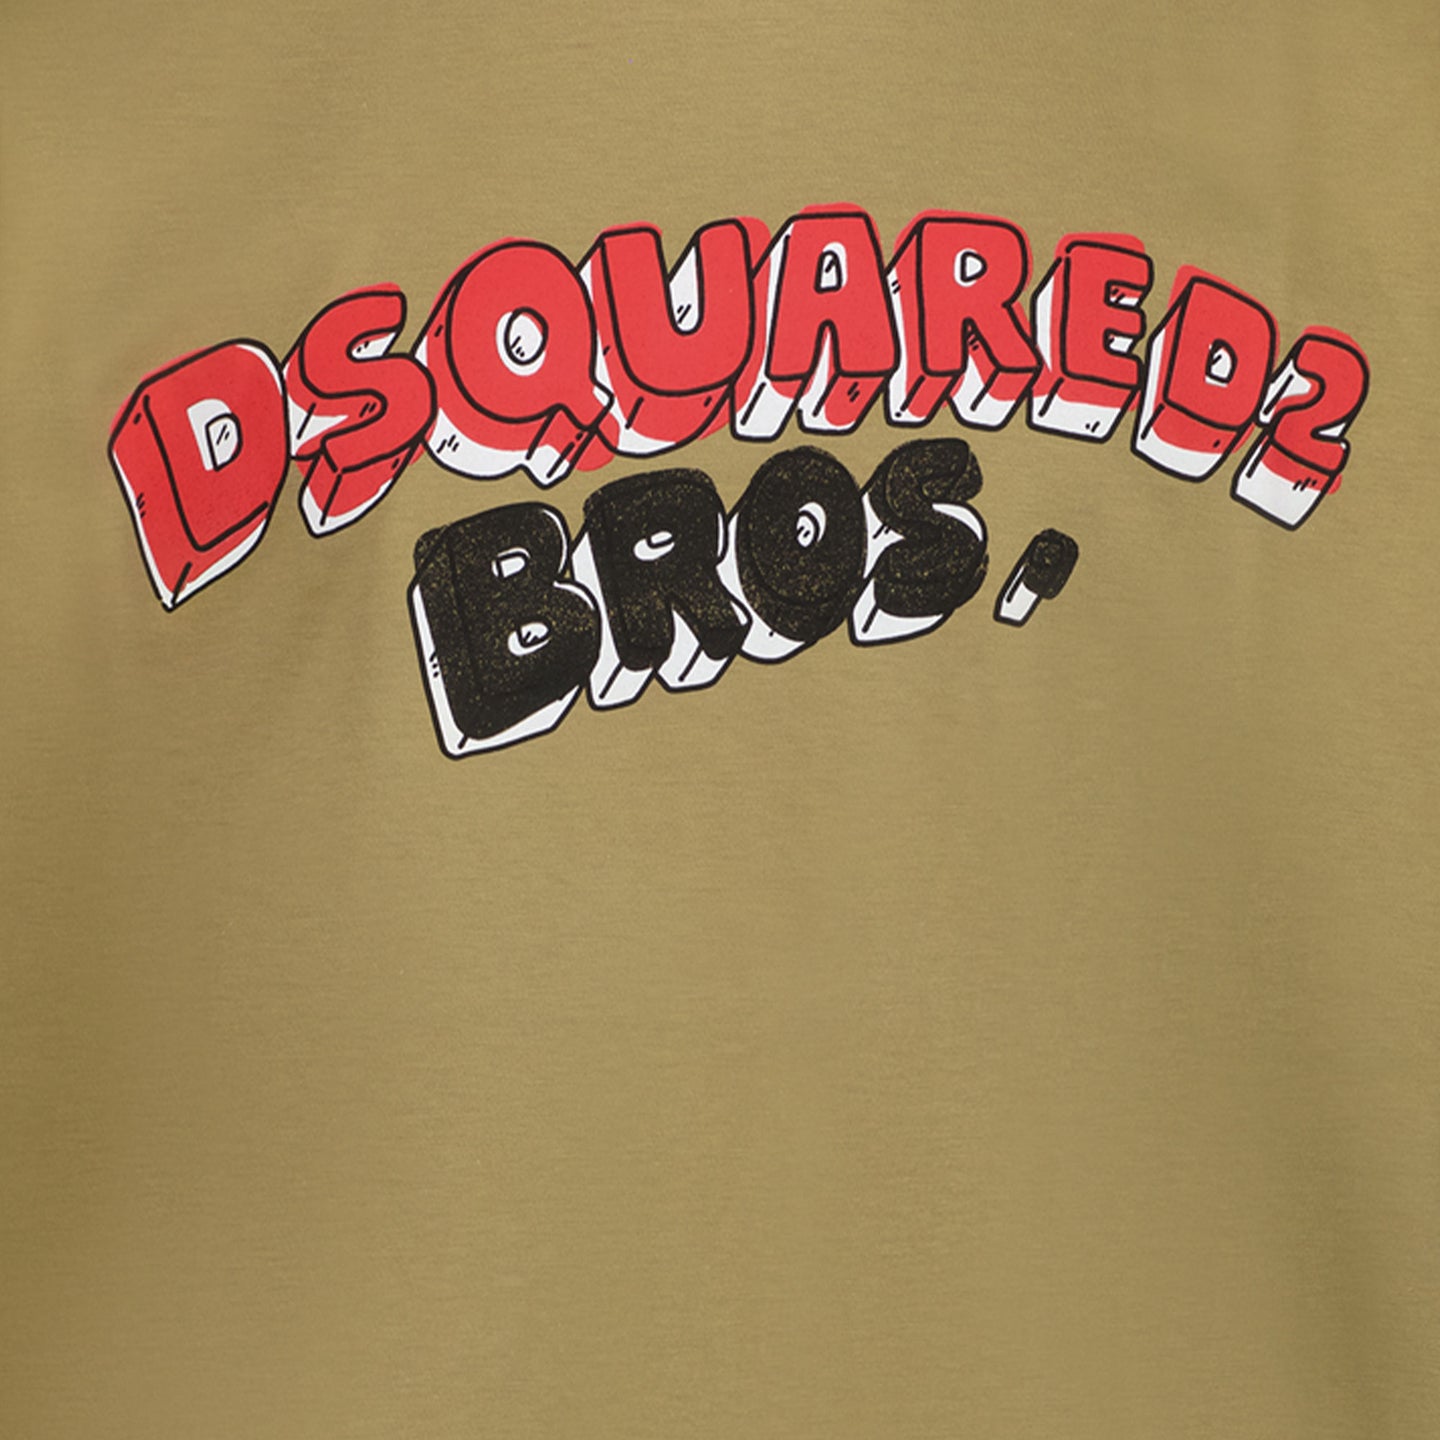 Dsquared2 Boys t-shirt Army